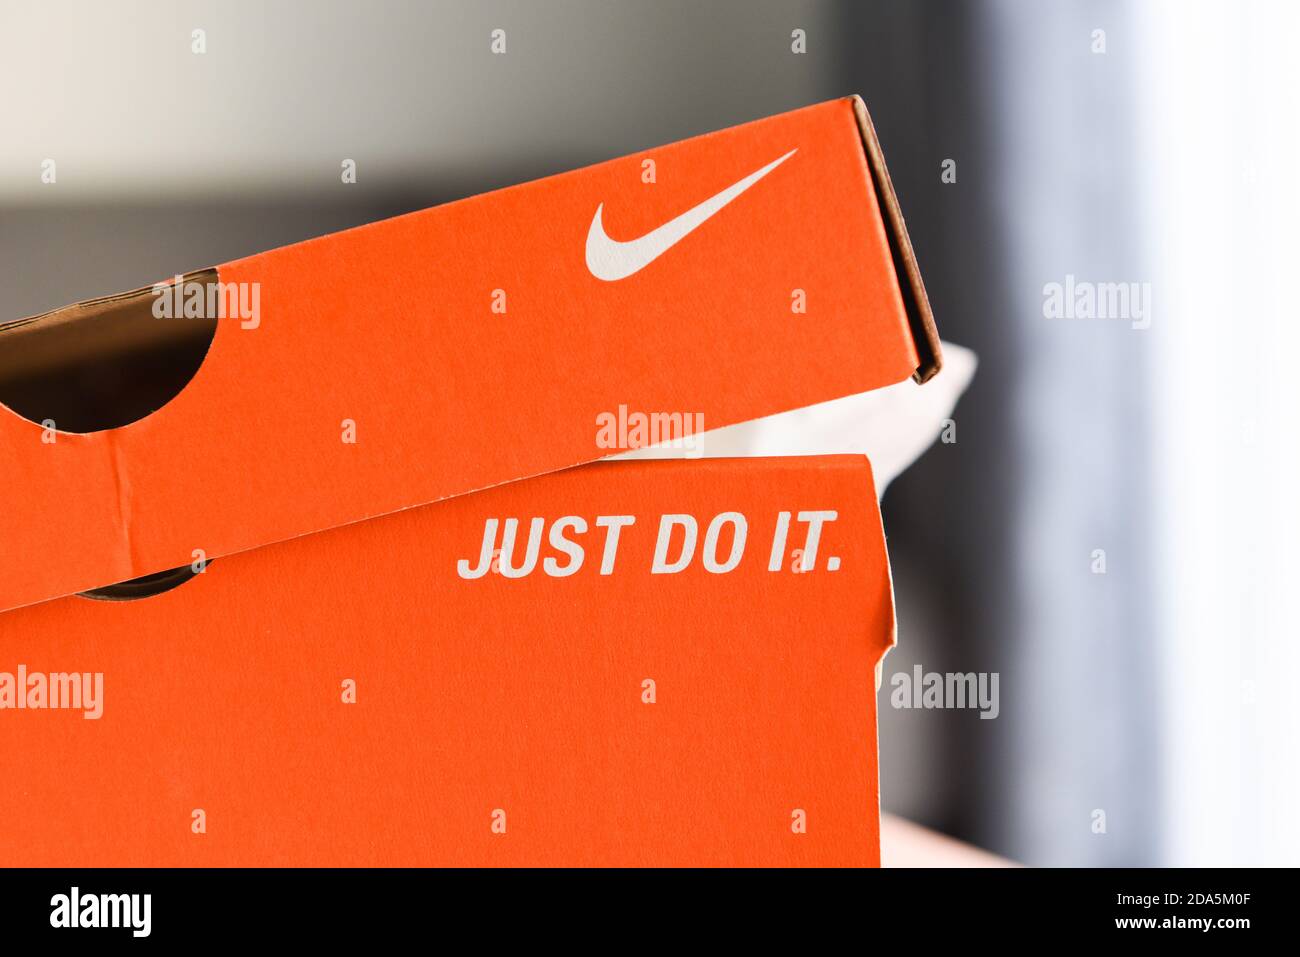 Nike running shoes box with Just Do It and nike logo on orange box in the  store : Bangkok Thailand November 4, 2020 Stock Photo - Alamy